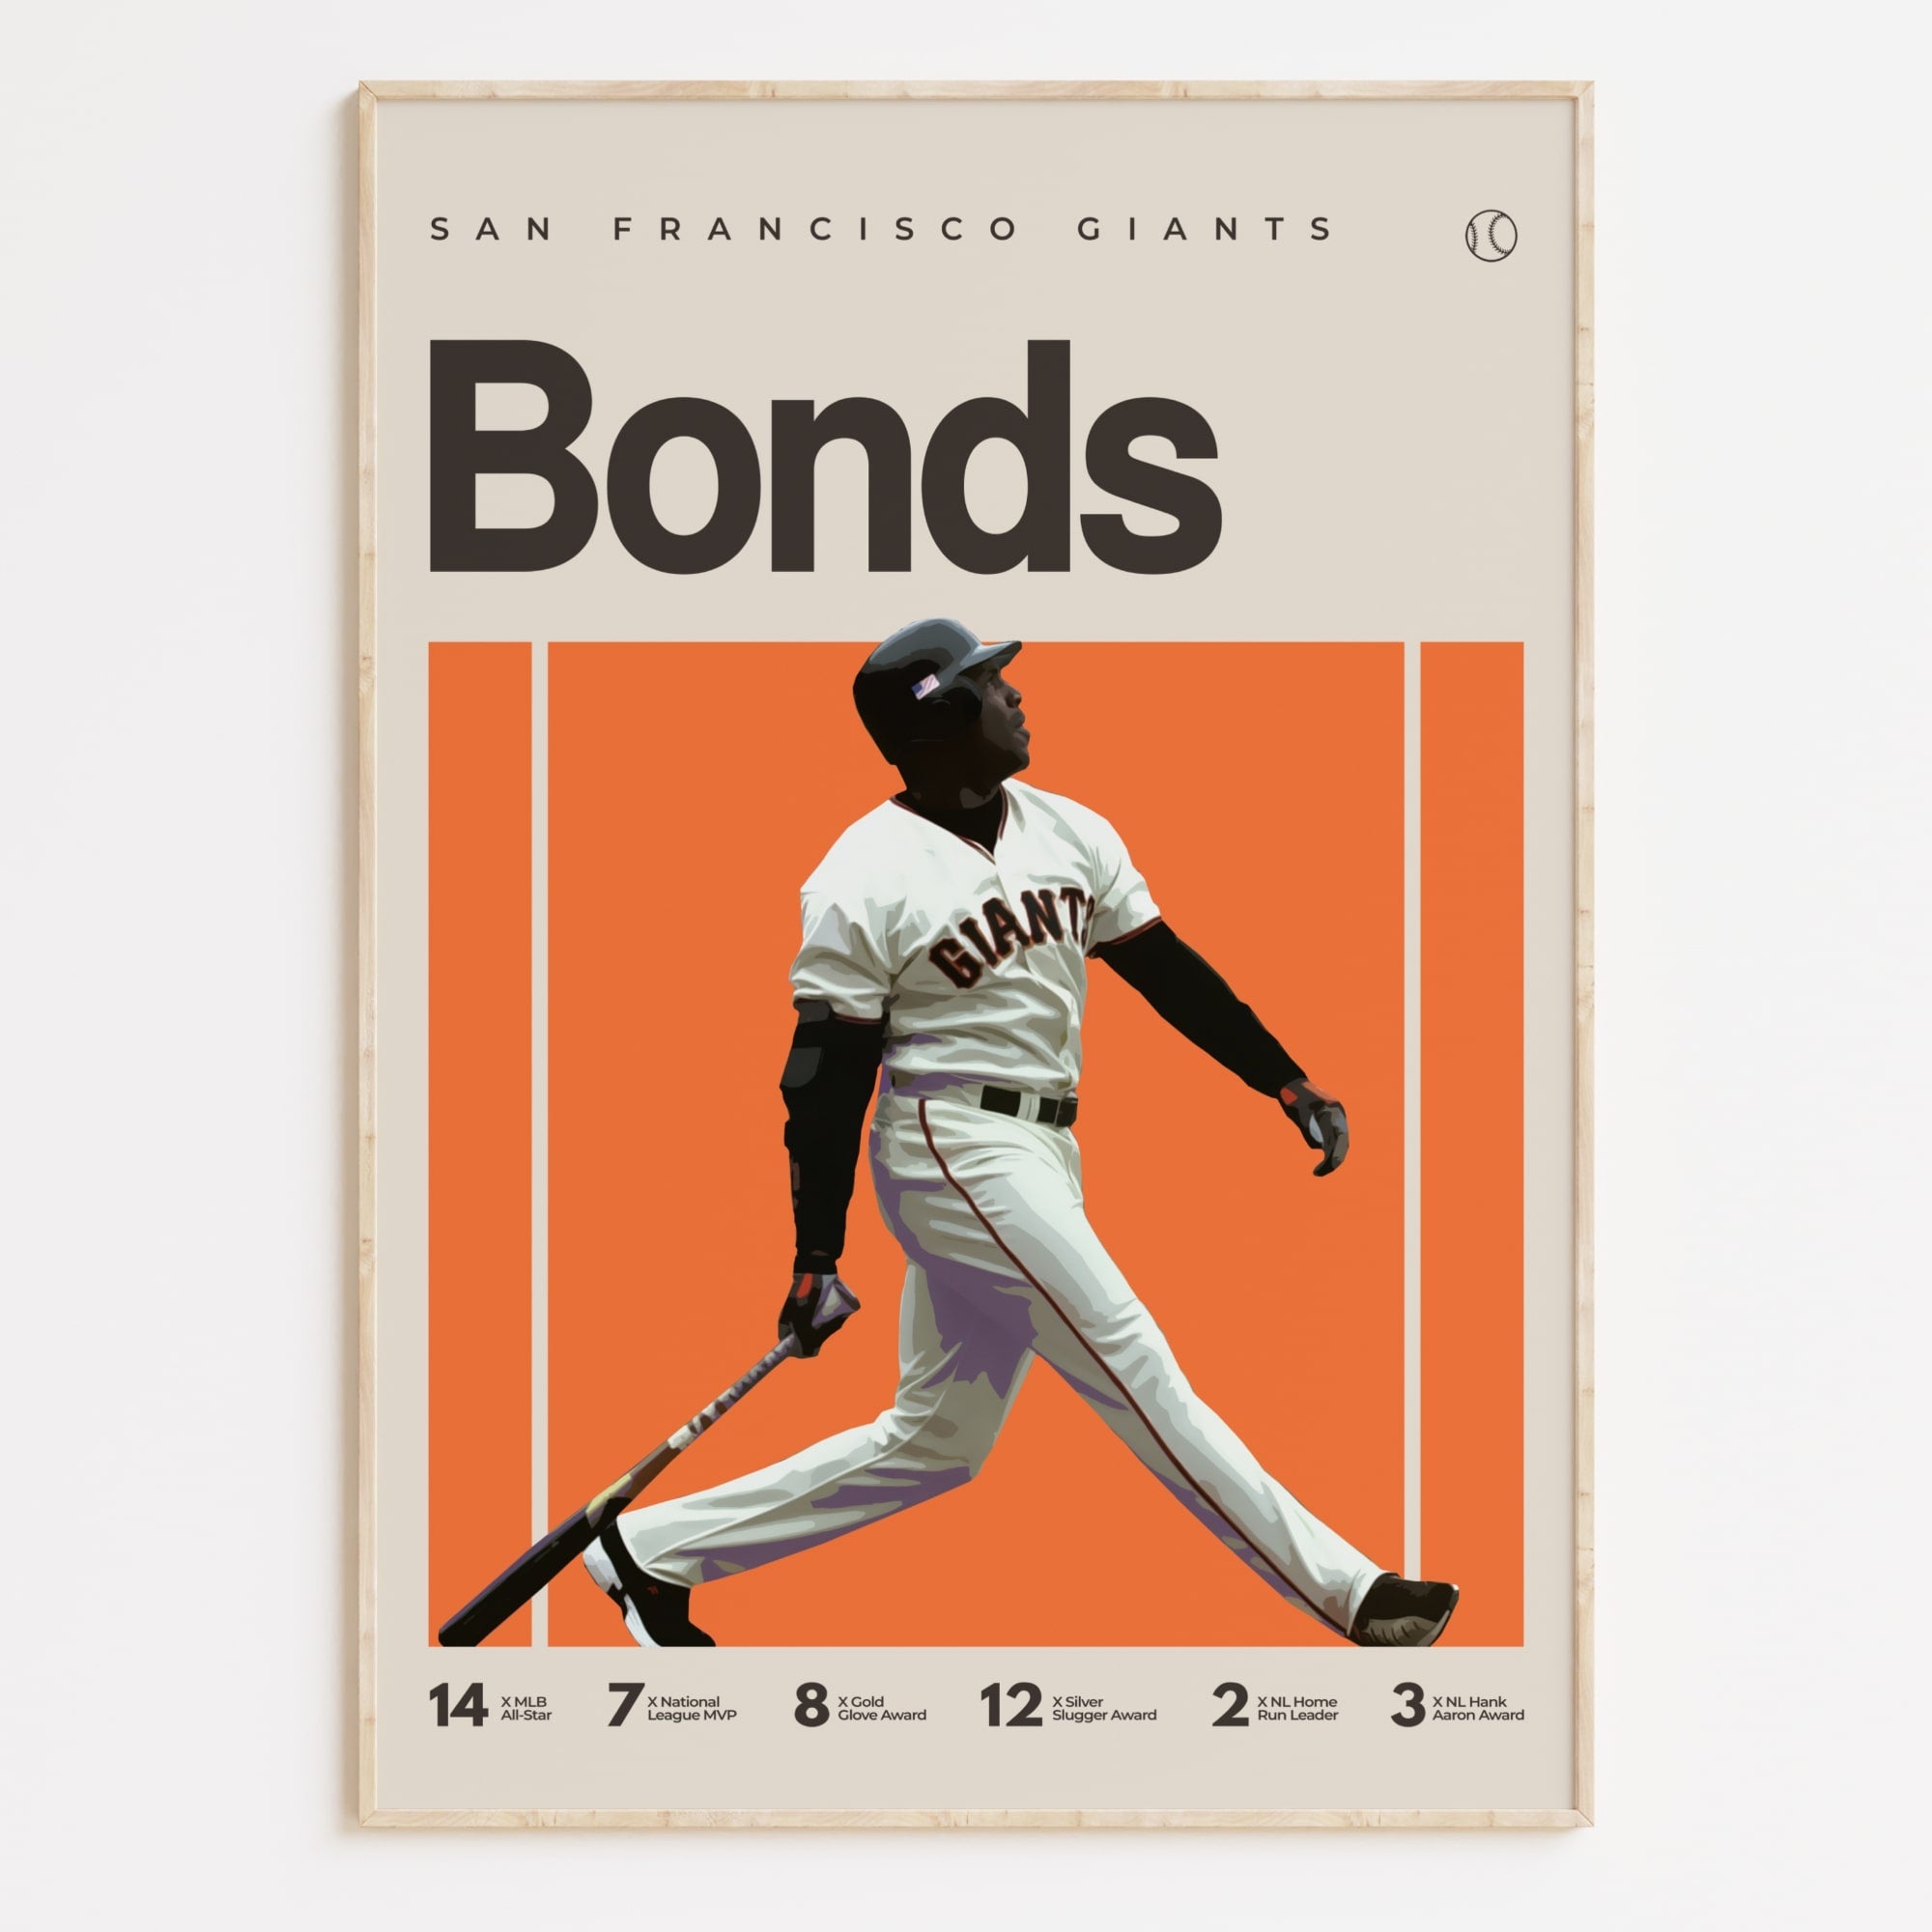 Barry Bonds Poster